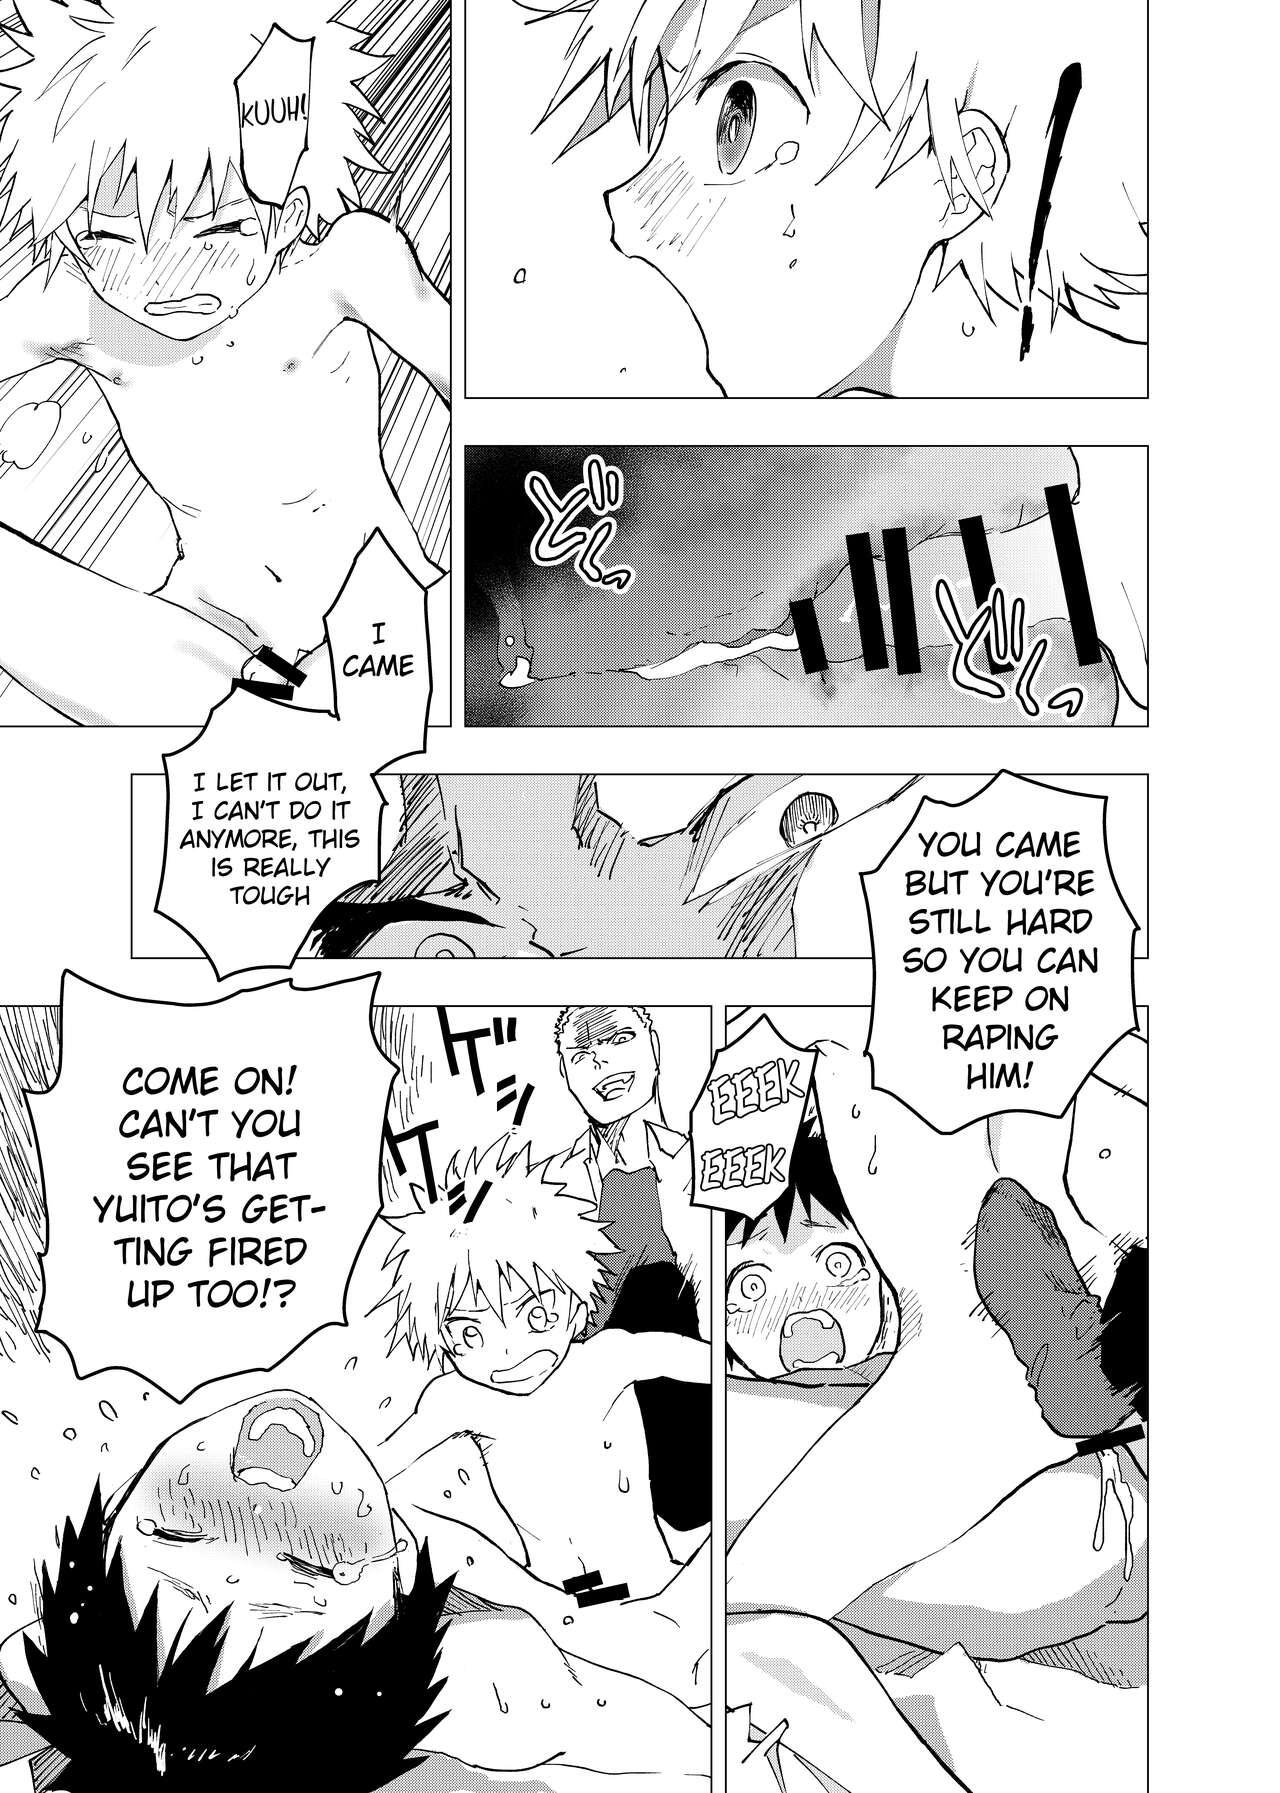 Ibasho ga Nai node Kamimachi shite mita Suterareta Shounen no Ero Manga Ch. 7 | A Dirty Manga About a Boy Who Got Abandoned and Is Waiting for Someone To Save Him Ch. 7 9